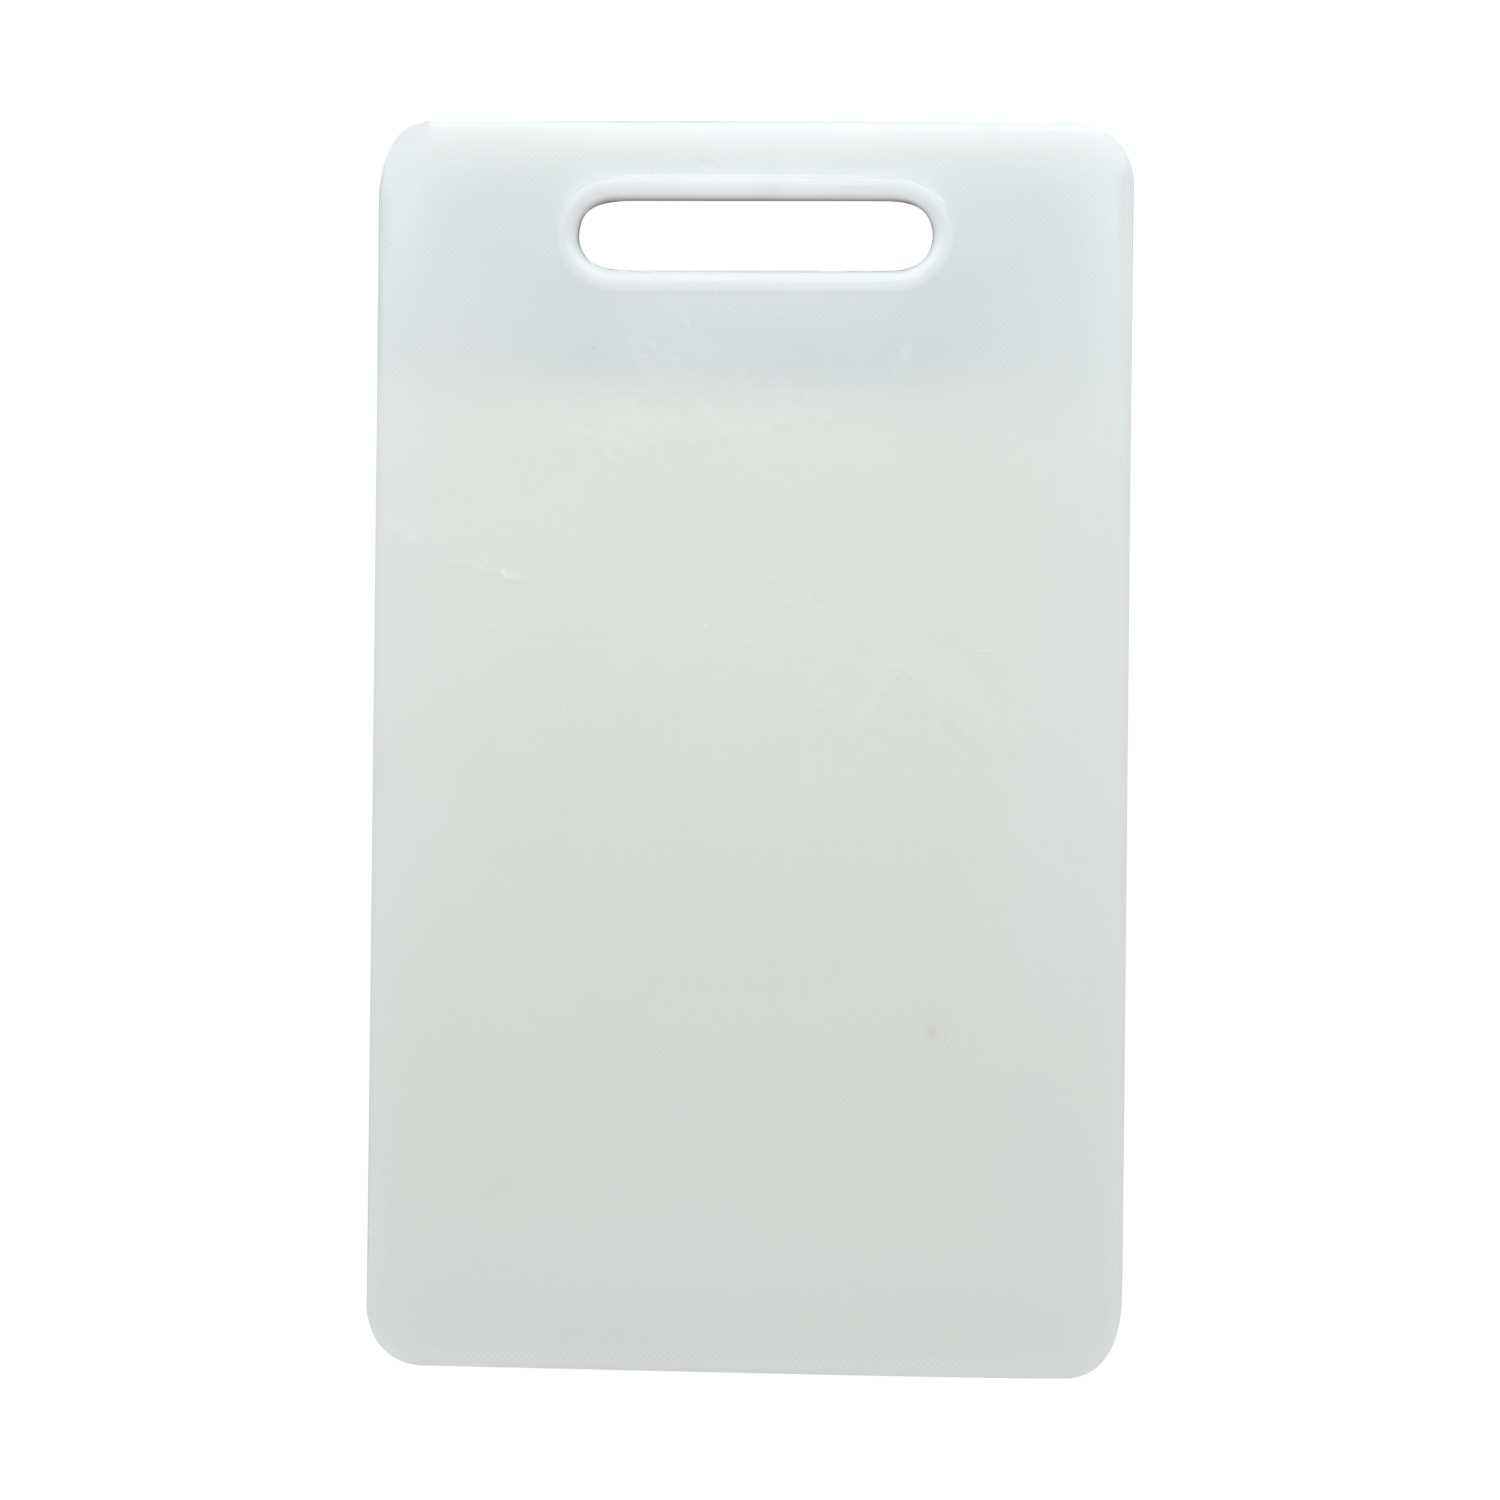 Raj Plastic Cutting Board White-S         